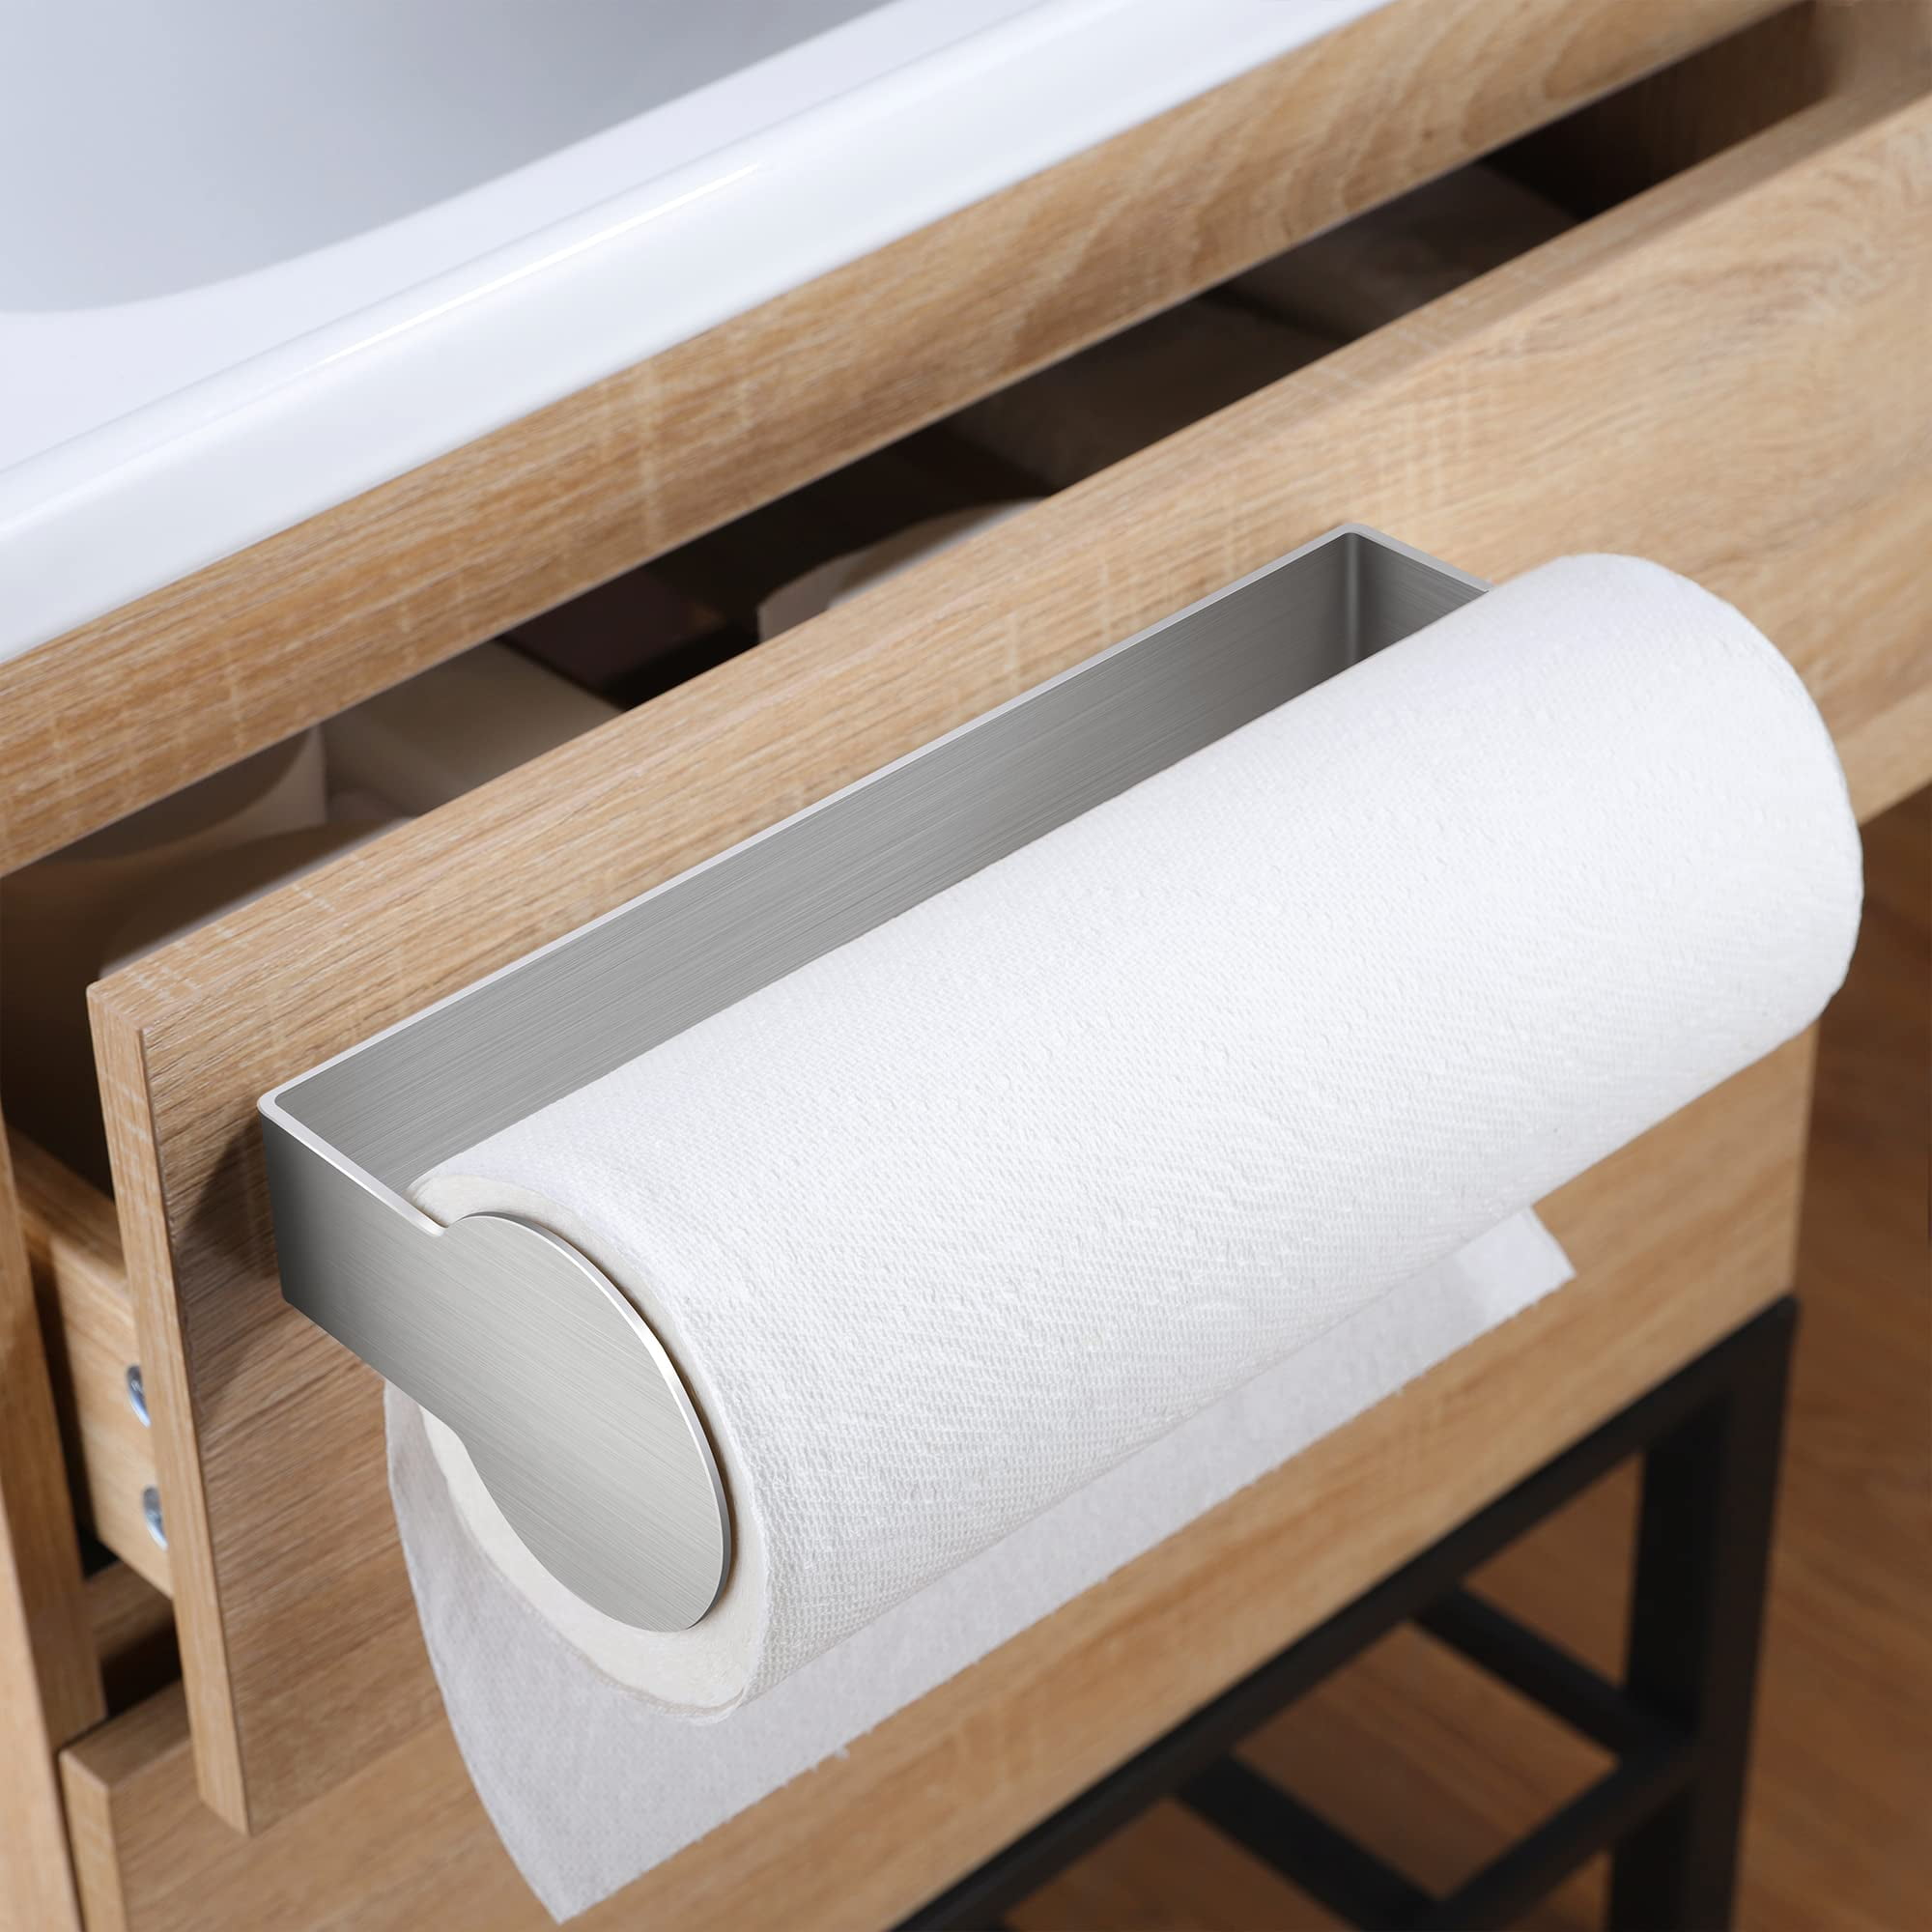 YIGII Paper Towel Holder Wall Mount - Adhesive Paper Towel Rack